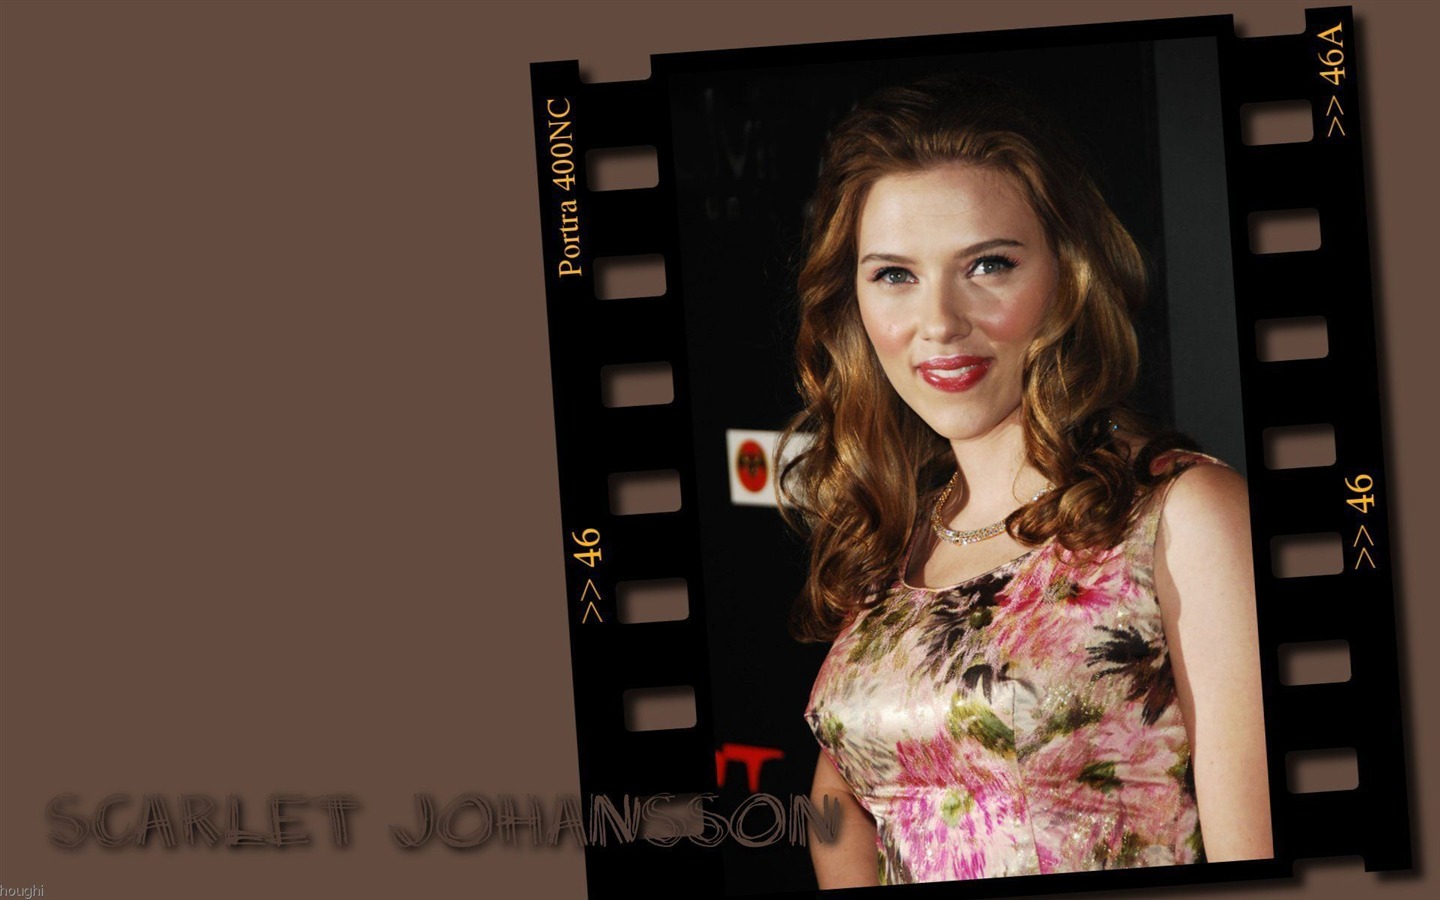 Scarlett Johansson beautiful wallpaper #2 - 1440x900